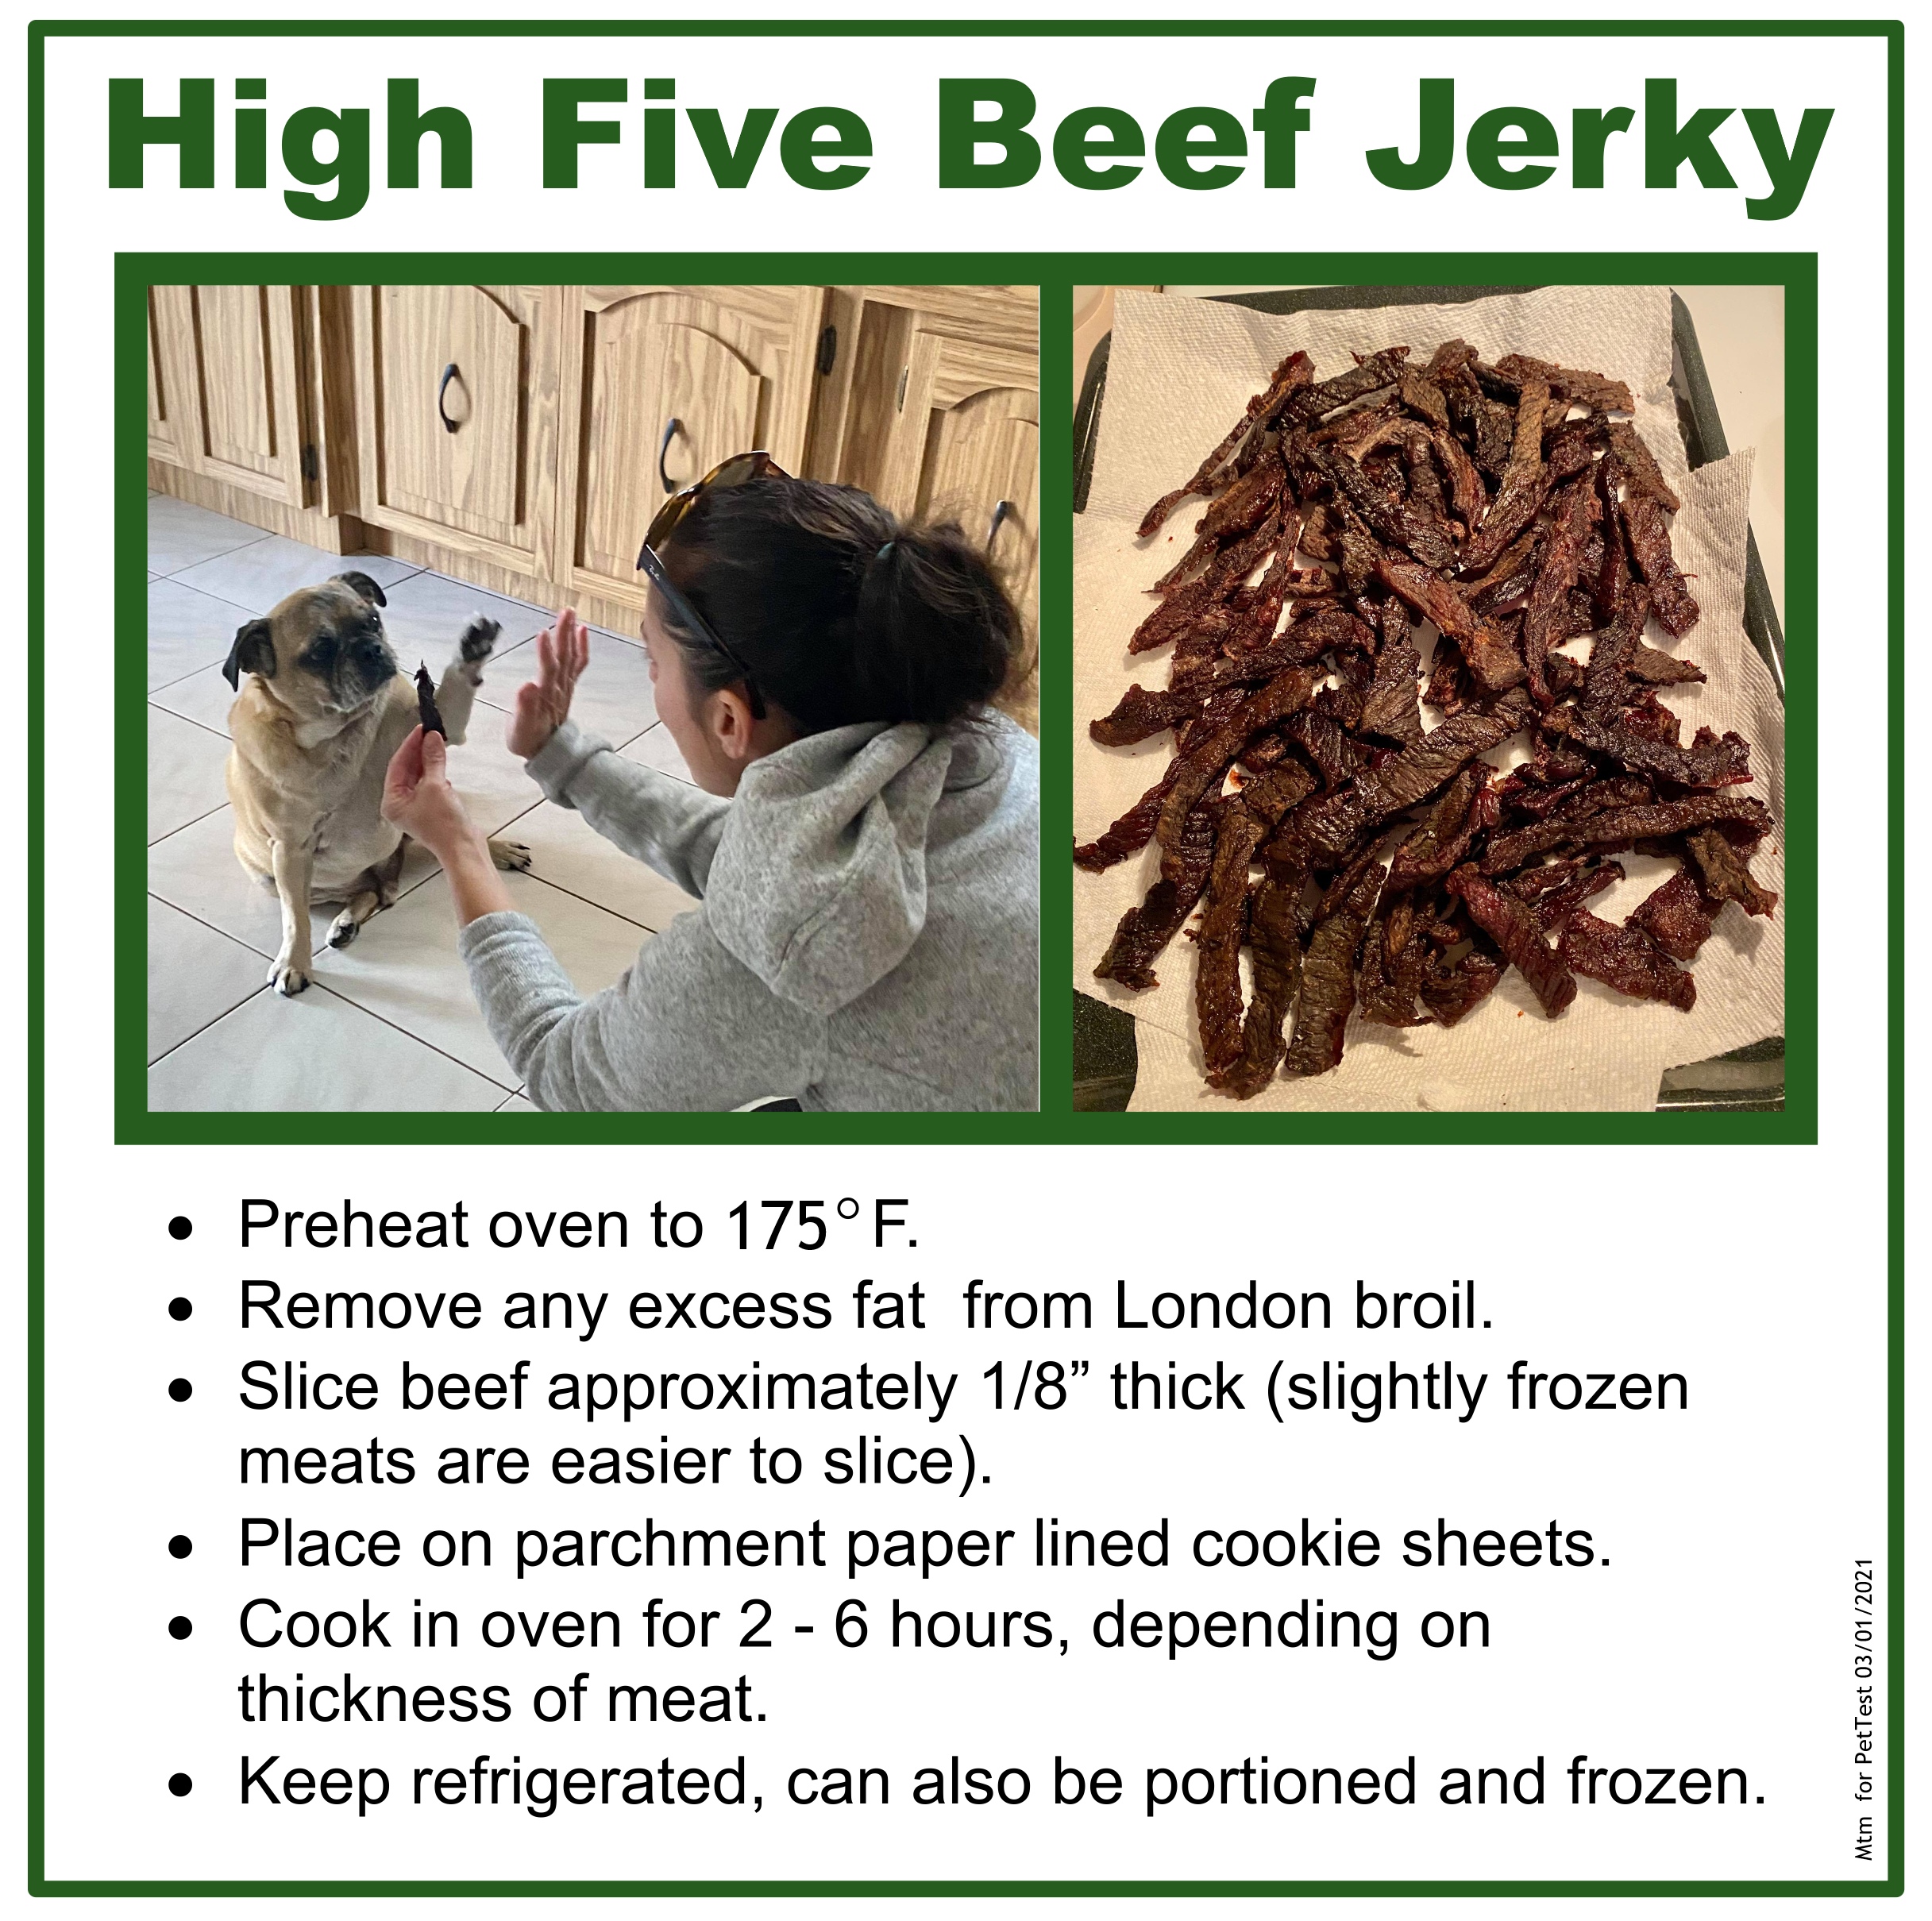 High Five Beef Jerky